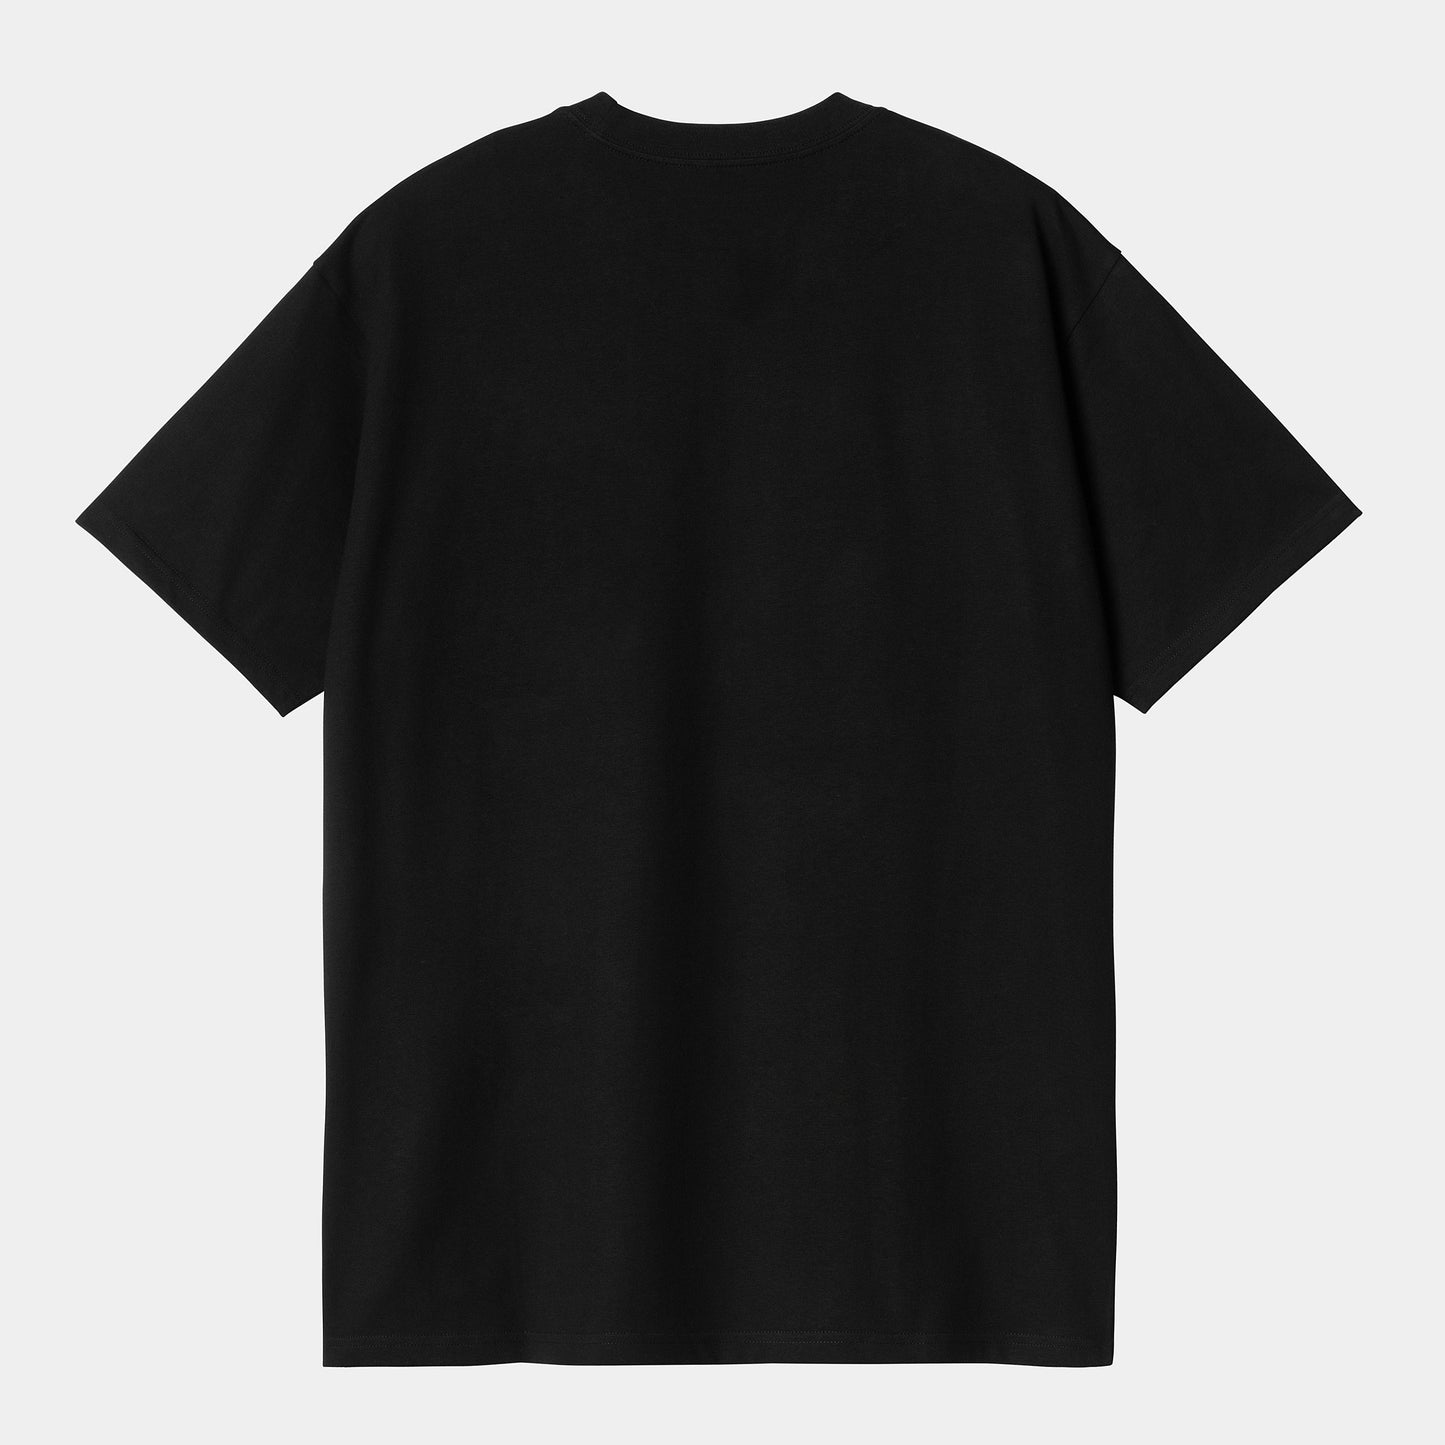 Carhartt WIP Amour Pocket T-Shirt Black/White